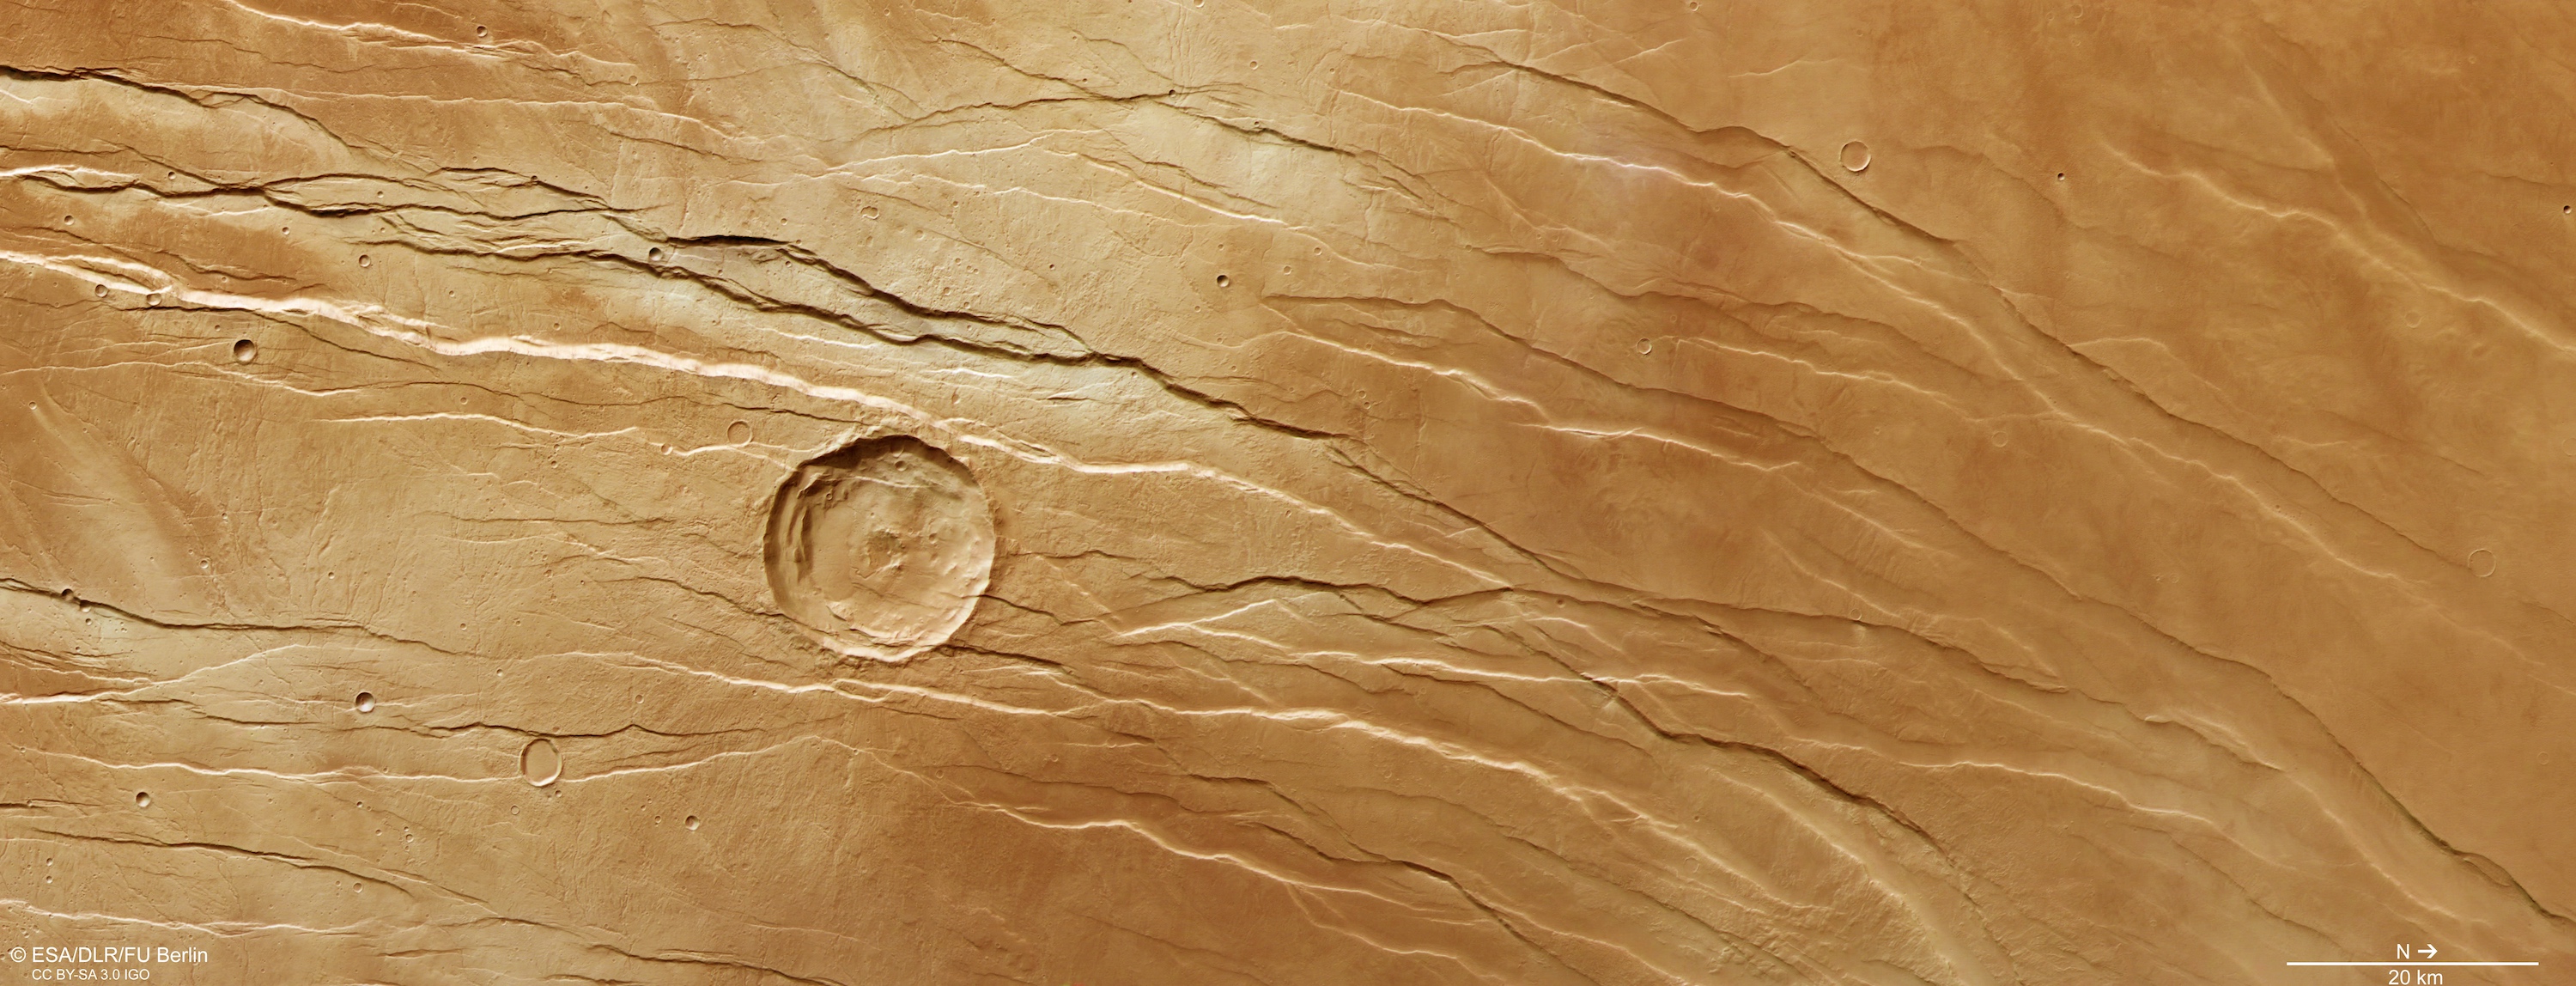 Tantalus Fossae est l'une des grandes fosses de Mars. © ESA, DLR, FU Berlin, CC BY-SA 3.0 IGO